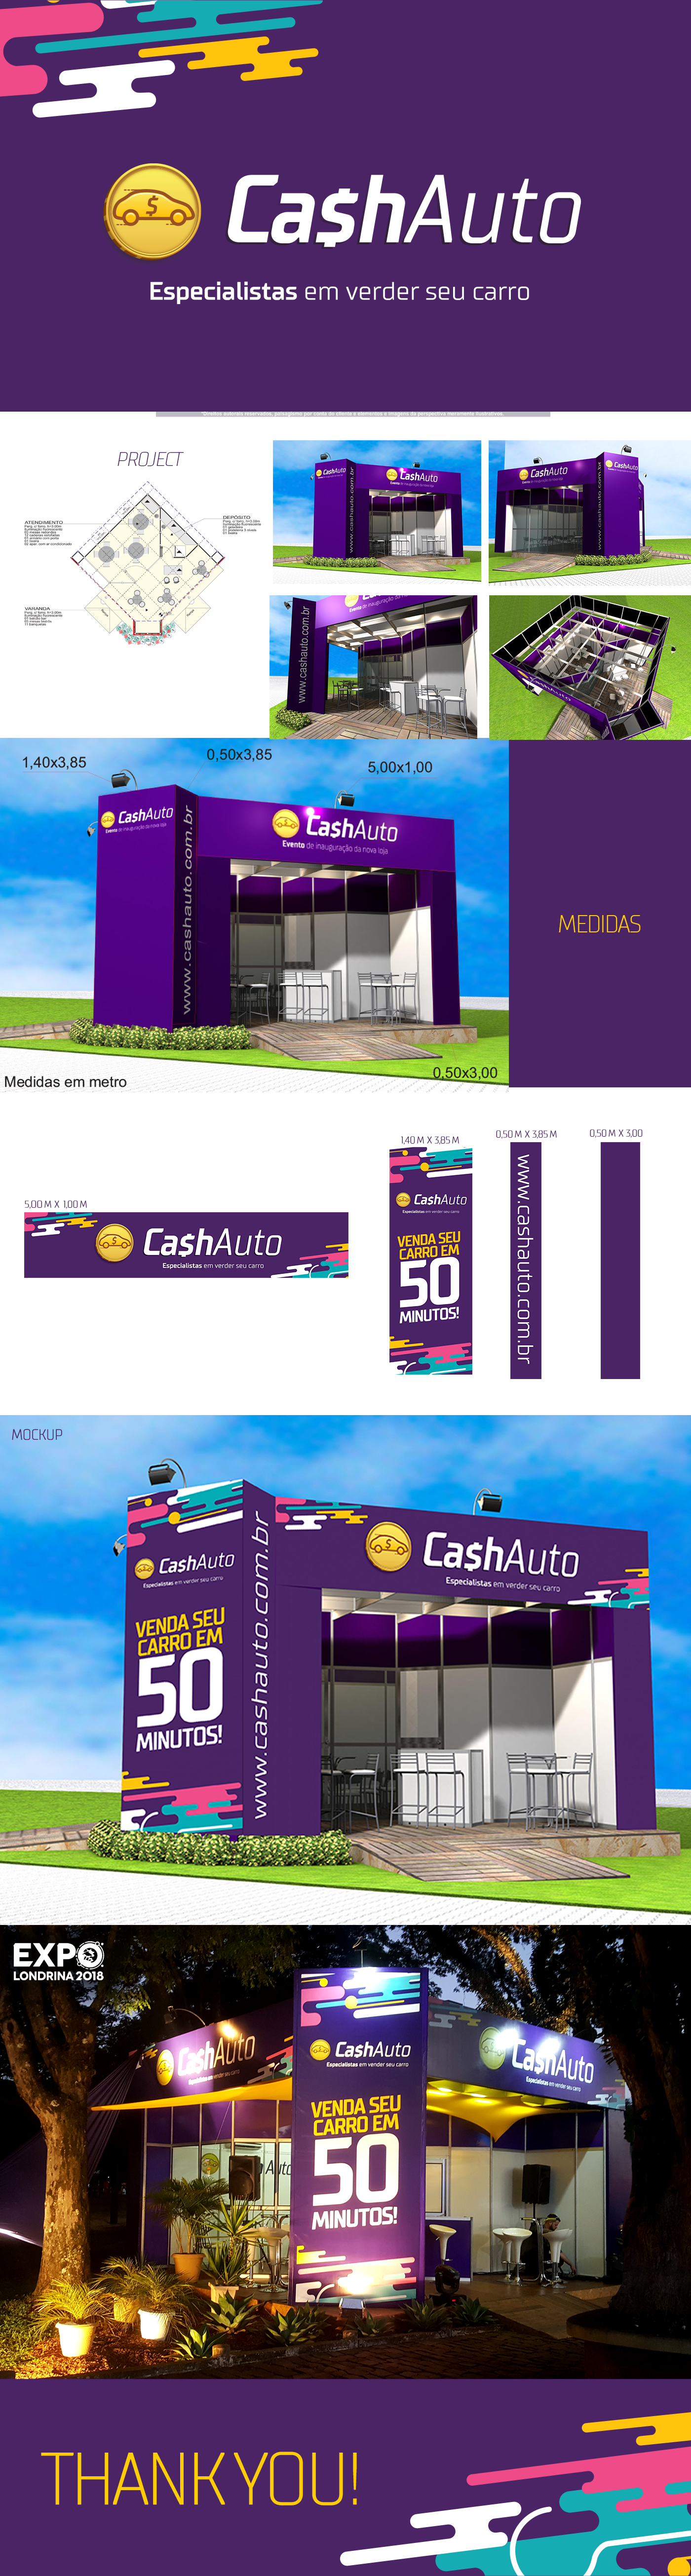 Stand Expo Londrina design cash auto